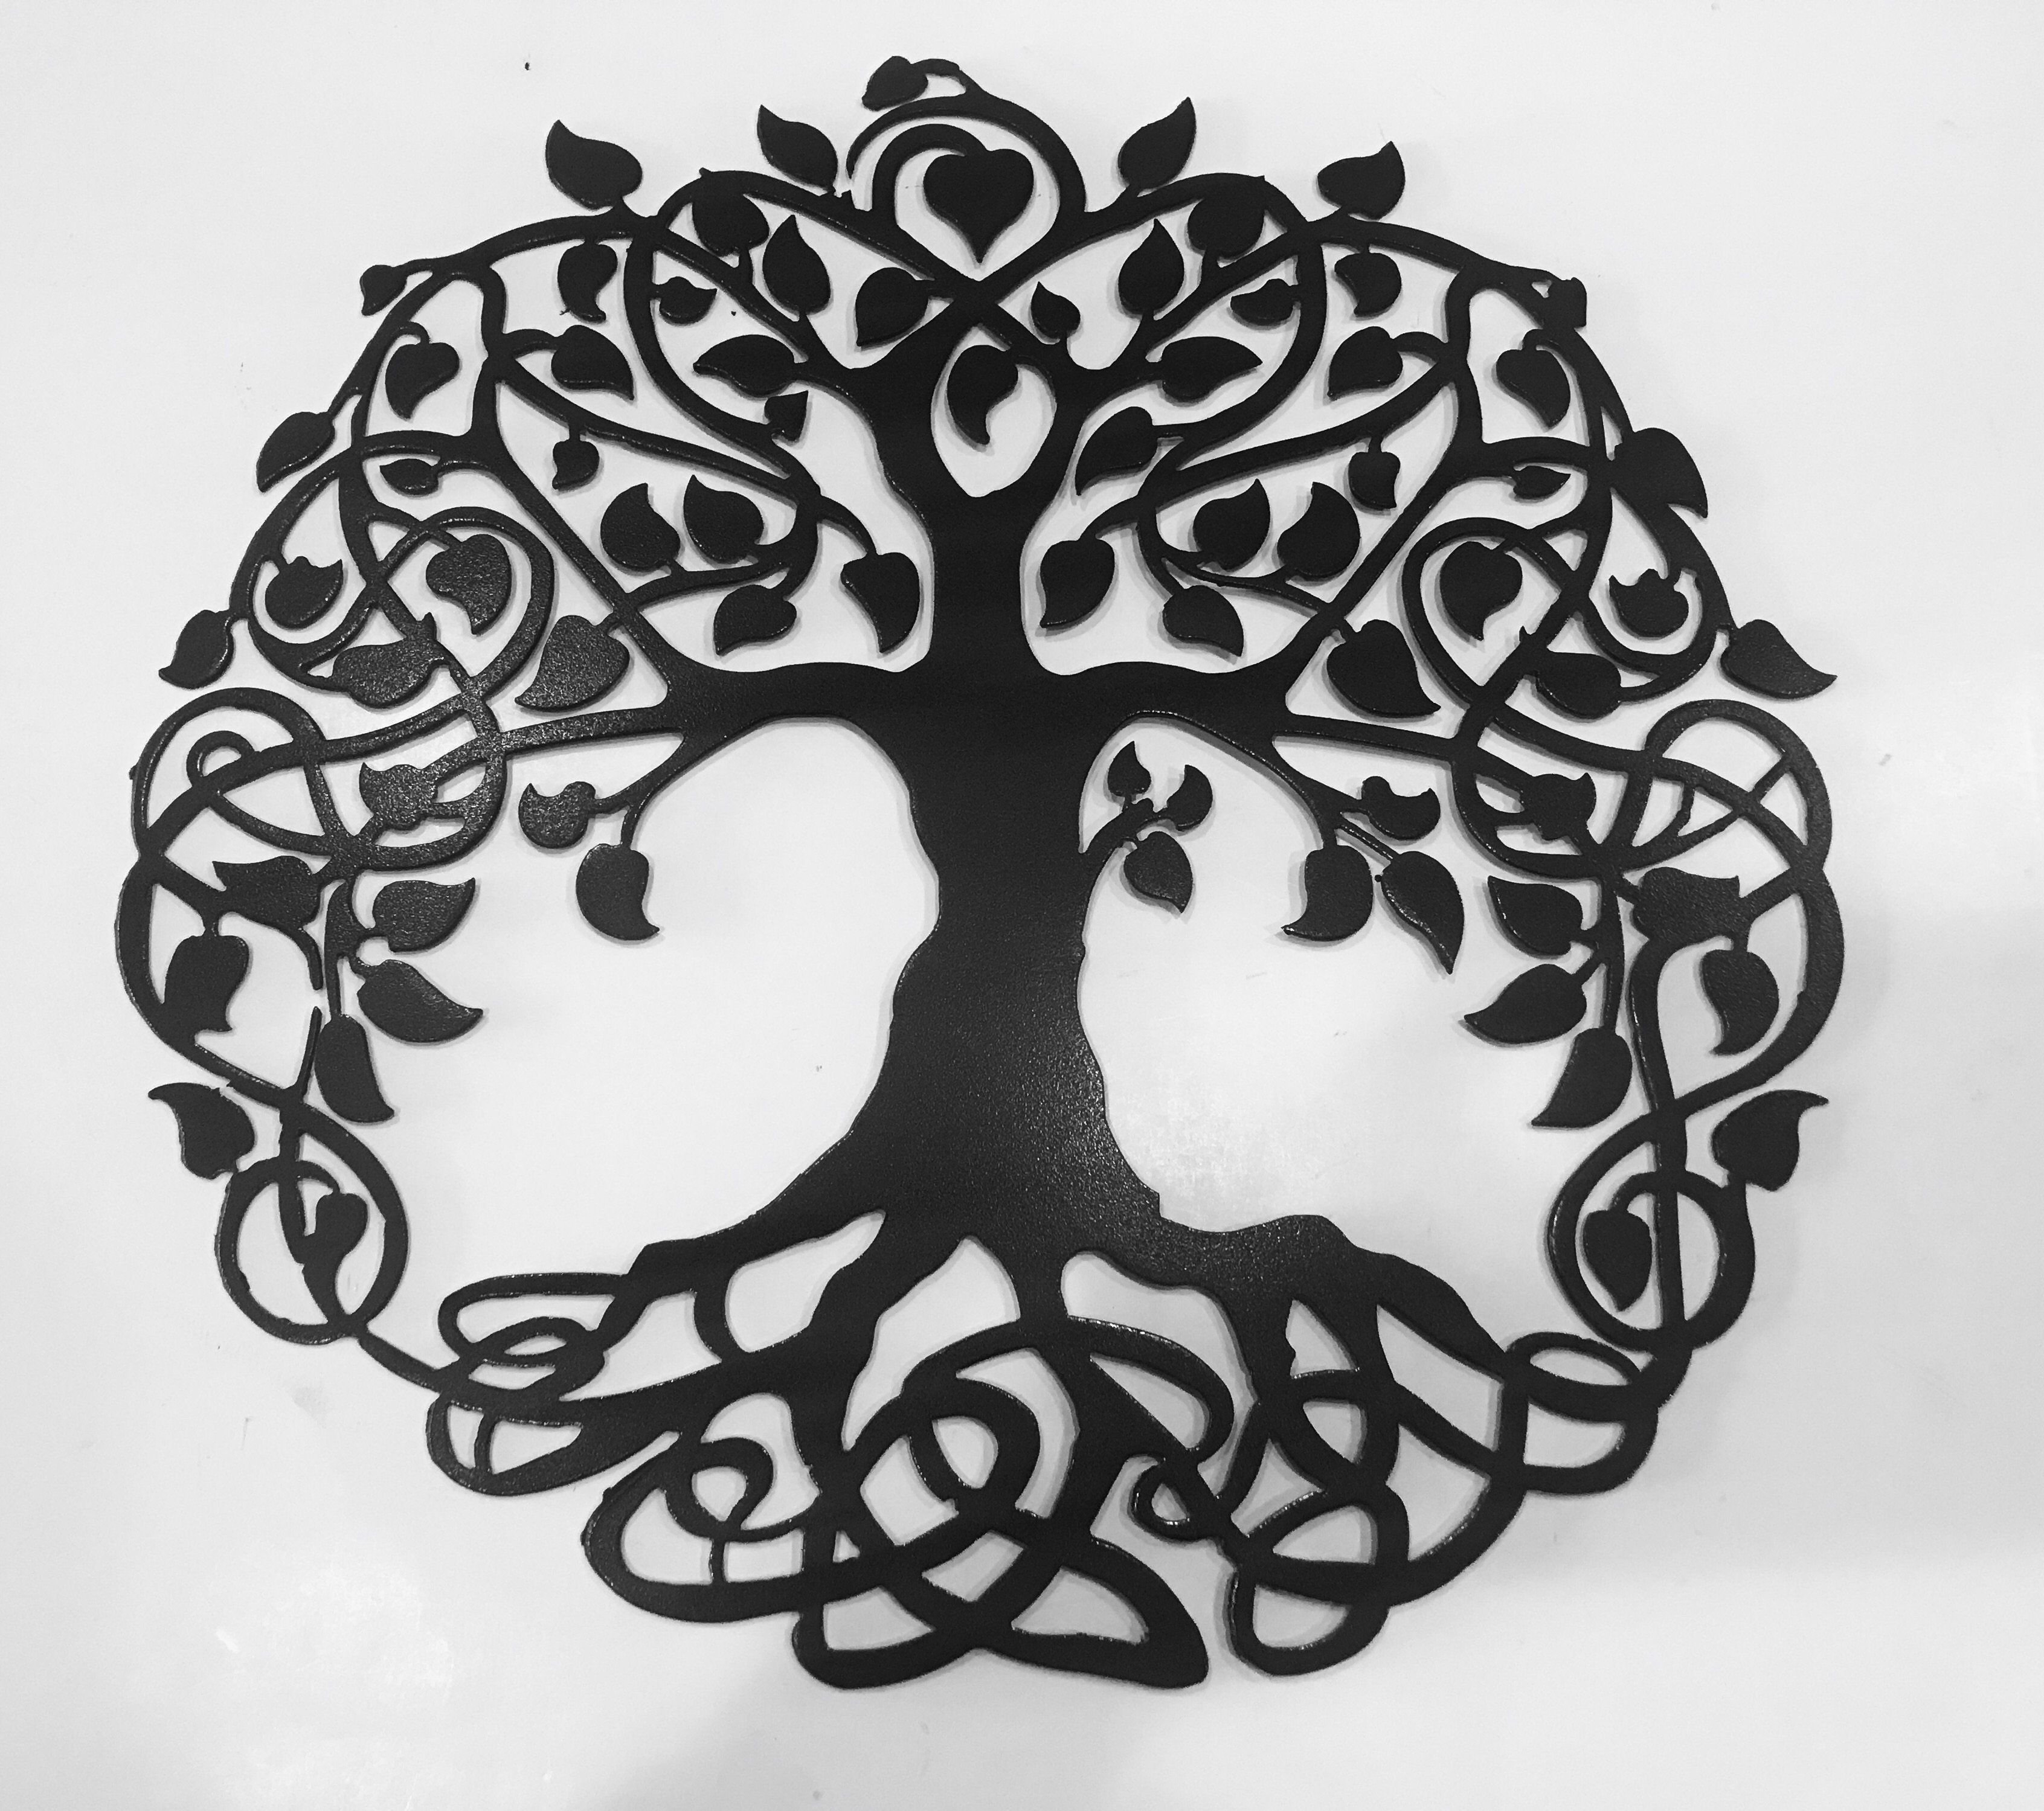 Тень древа. "Tree of Life" ("дерево жизни") by degree. Кельтское дерево. Дерево символ. Кельтское дерево жизни.